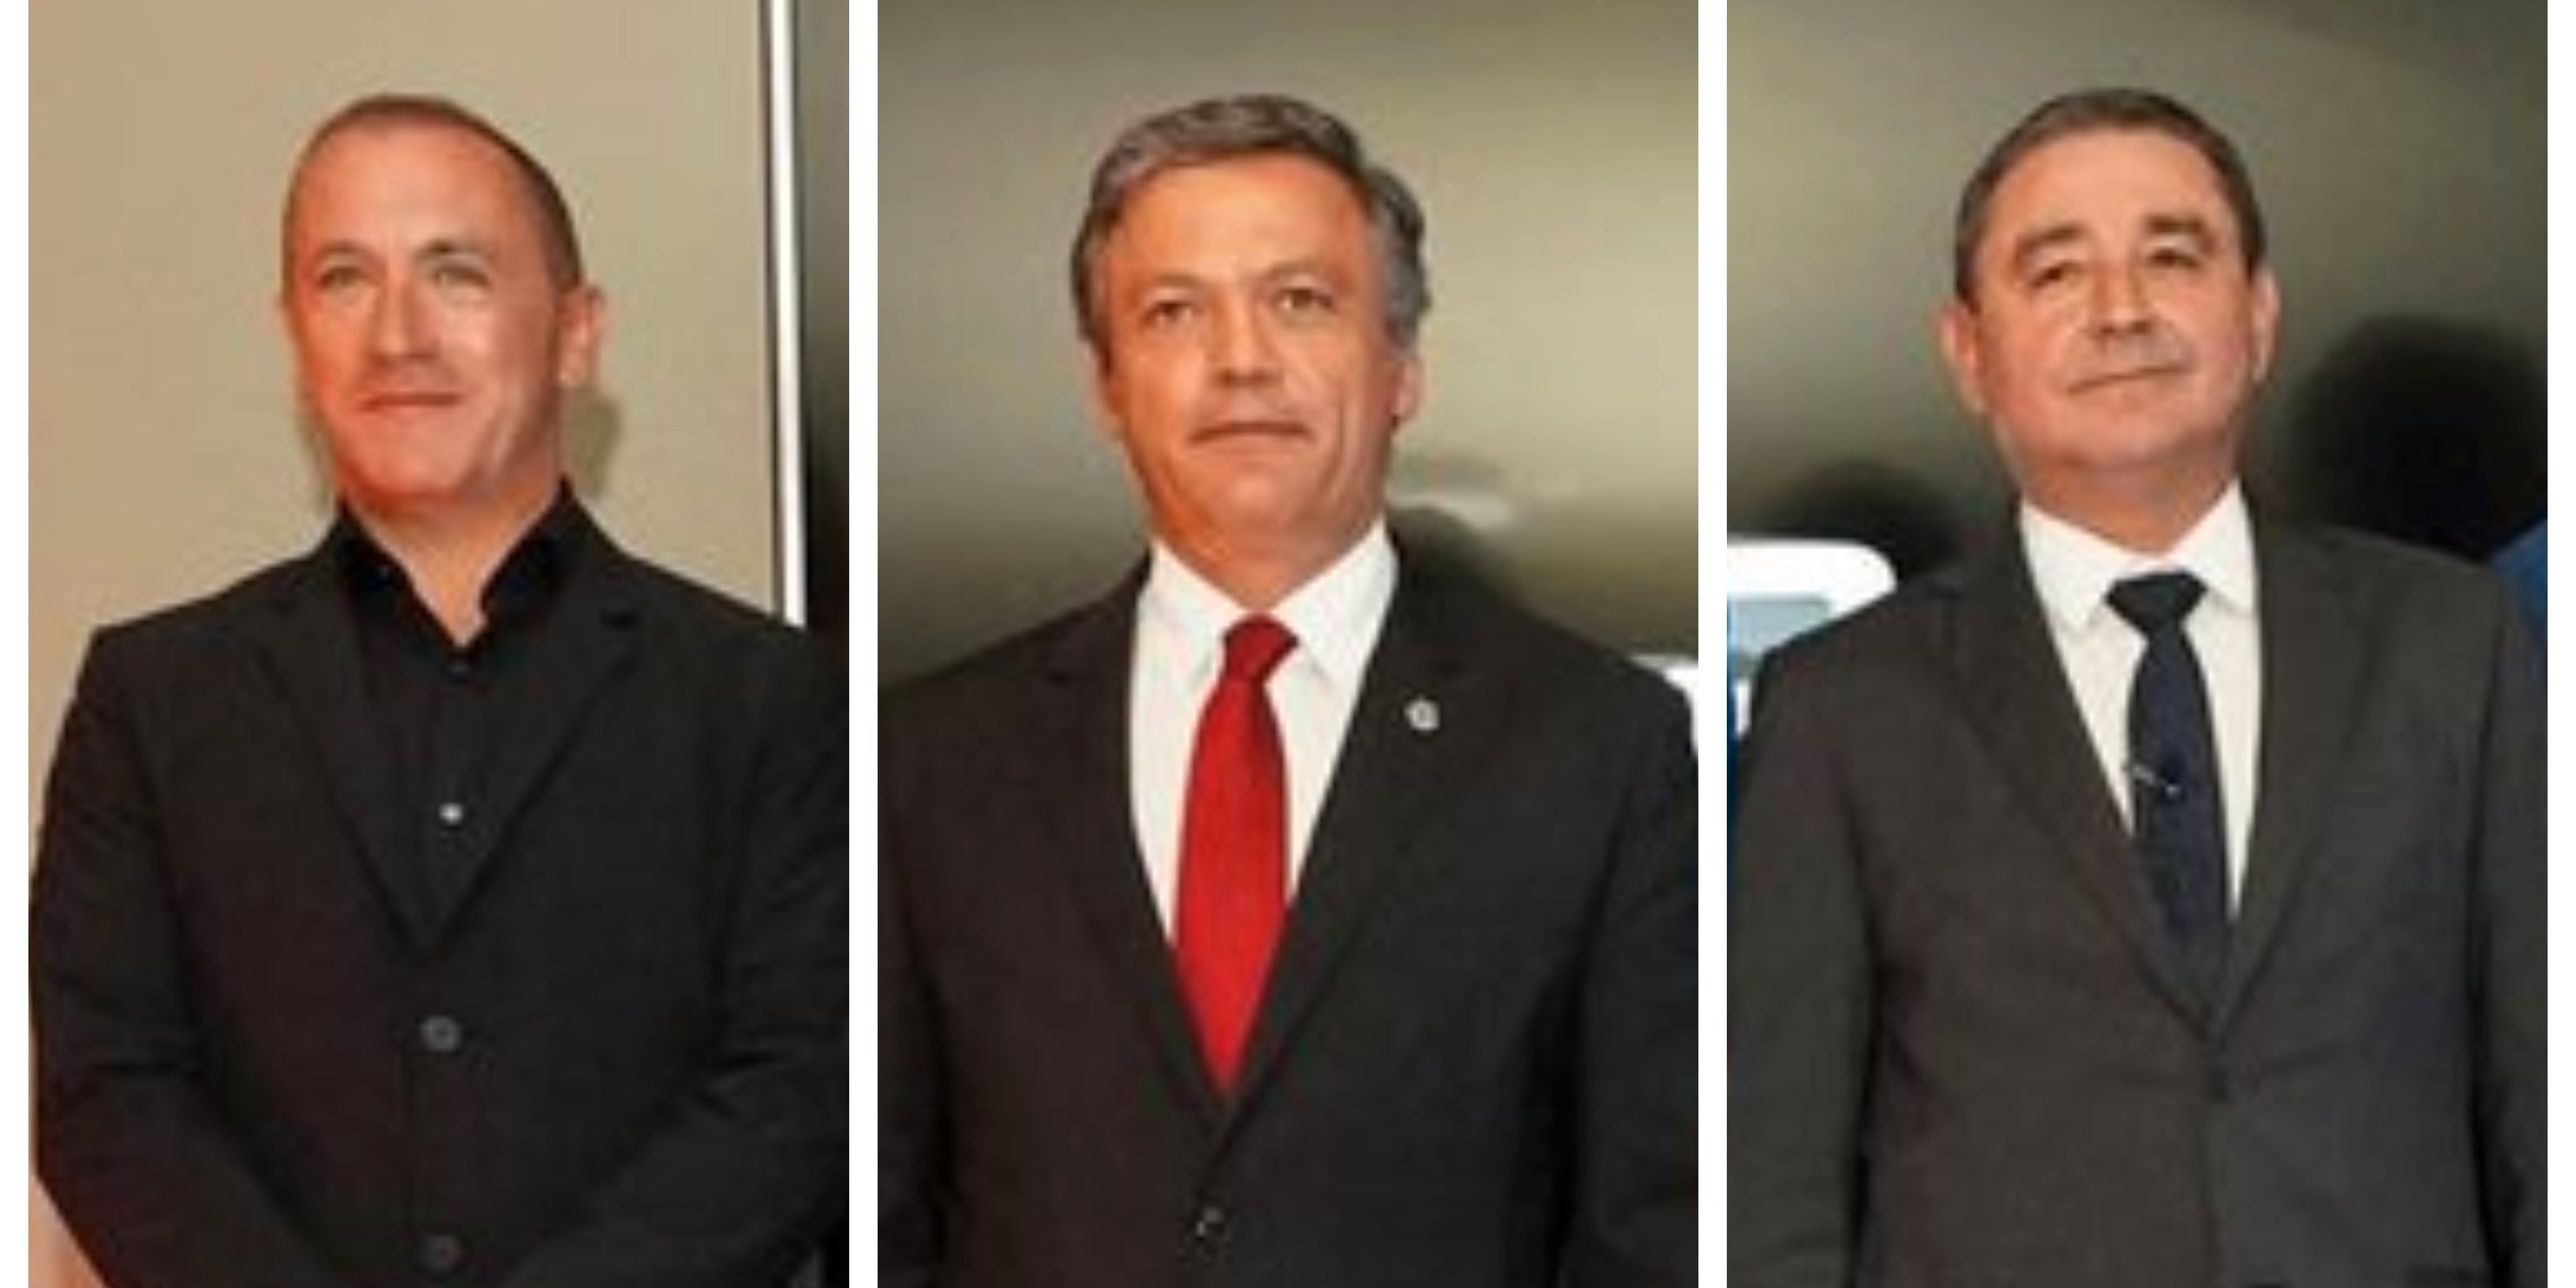 (da esquerda para a direita) Custódio Correia (CEO do Grupo Socicorreia), Pedro Calado (ex-presidente da Câmara do Funchal) e Avelino Farinha (chairman do Grupo AFA)